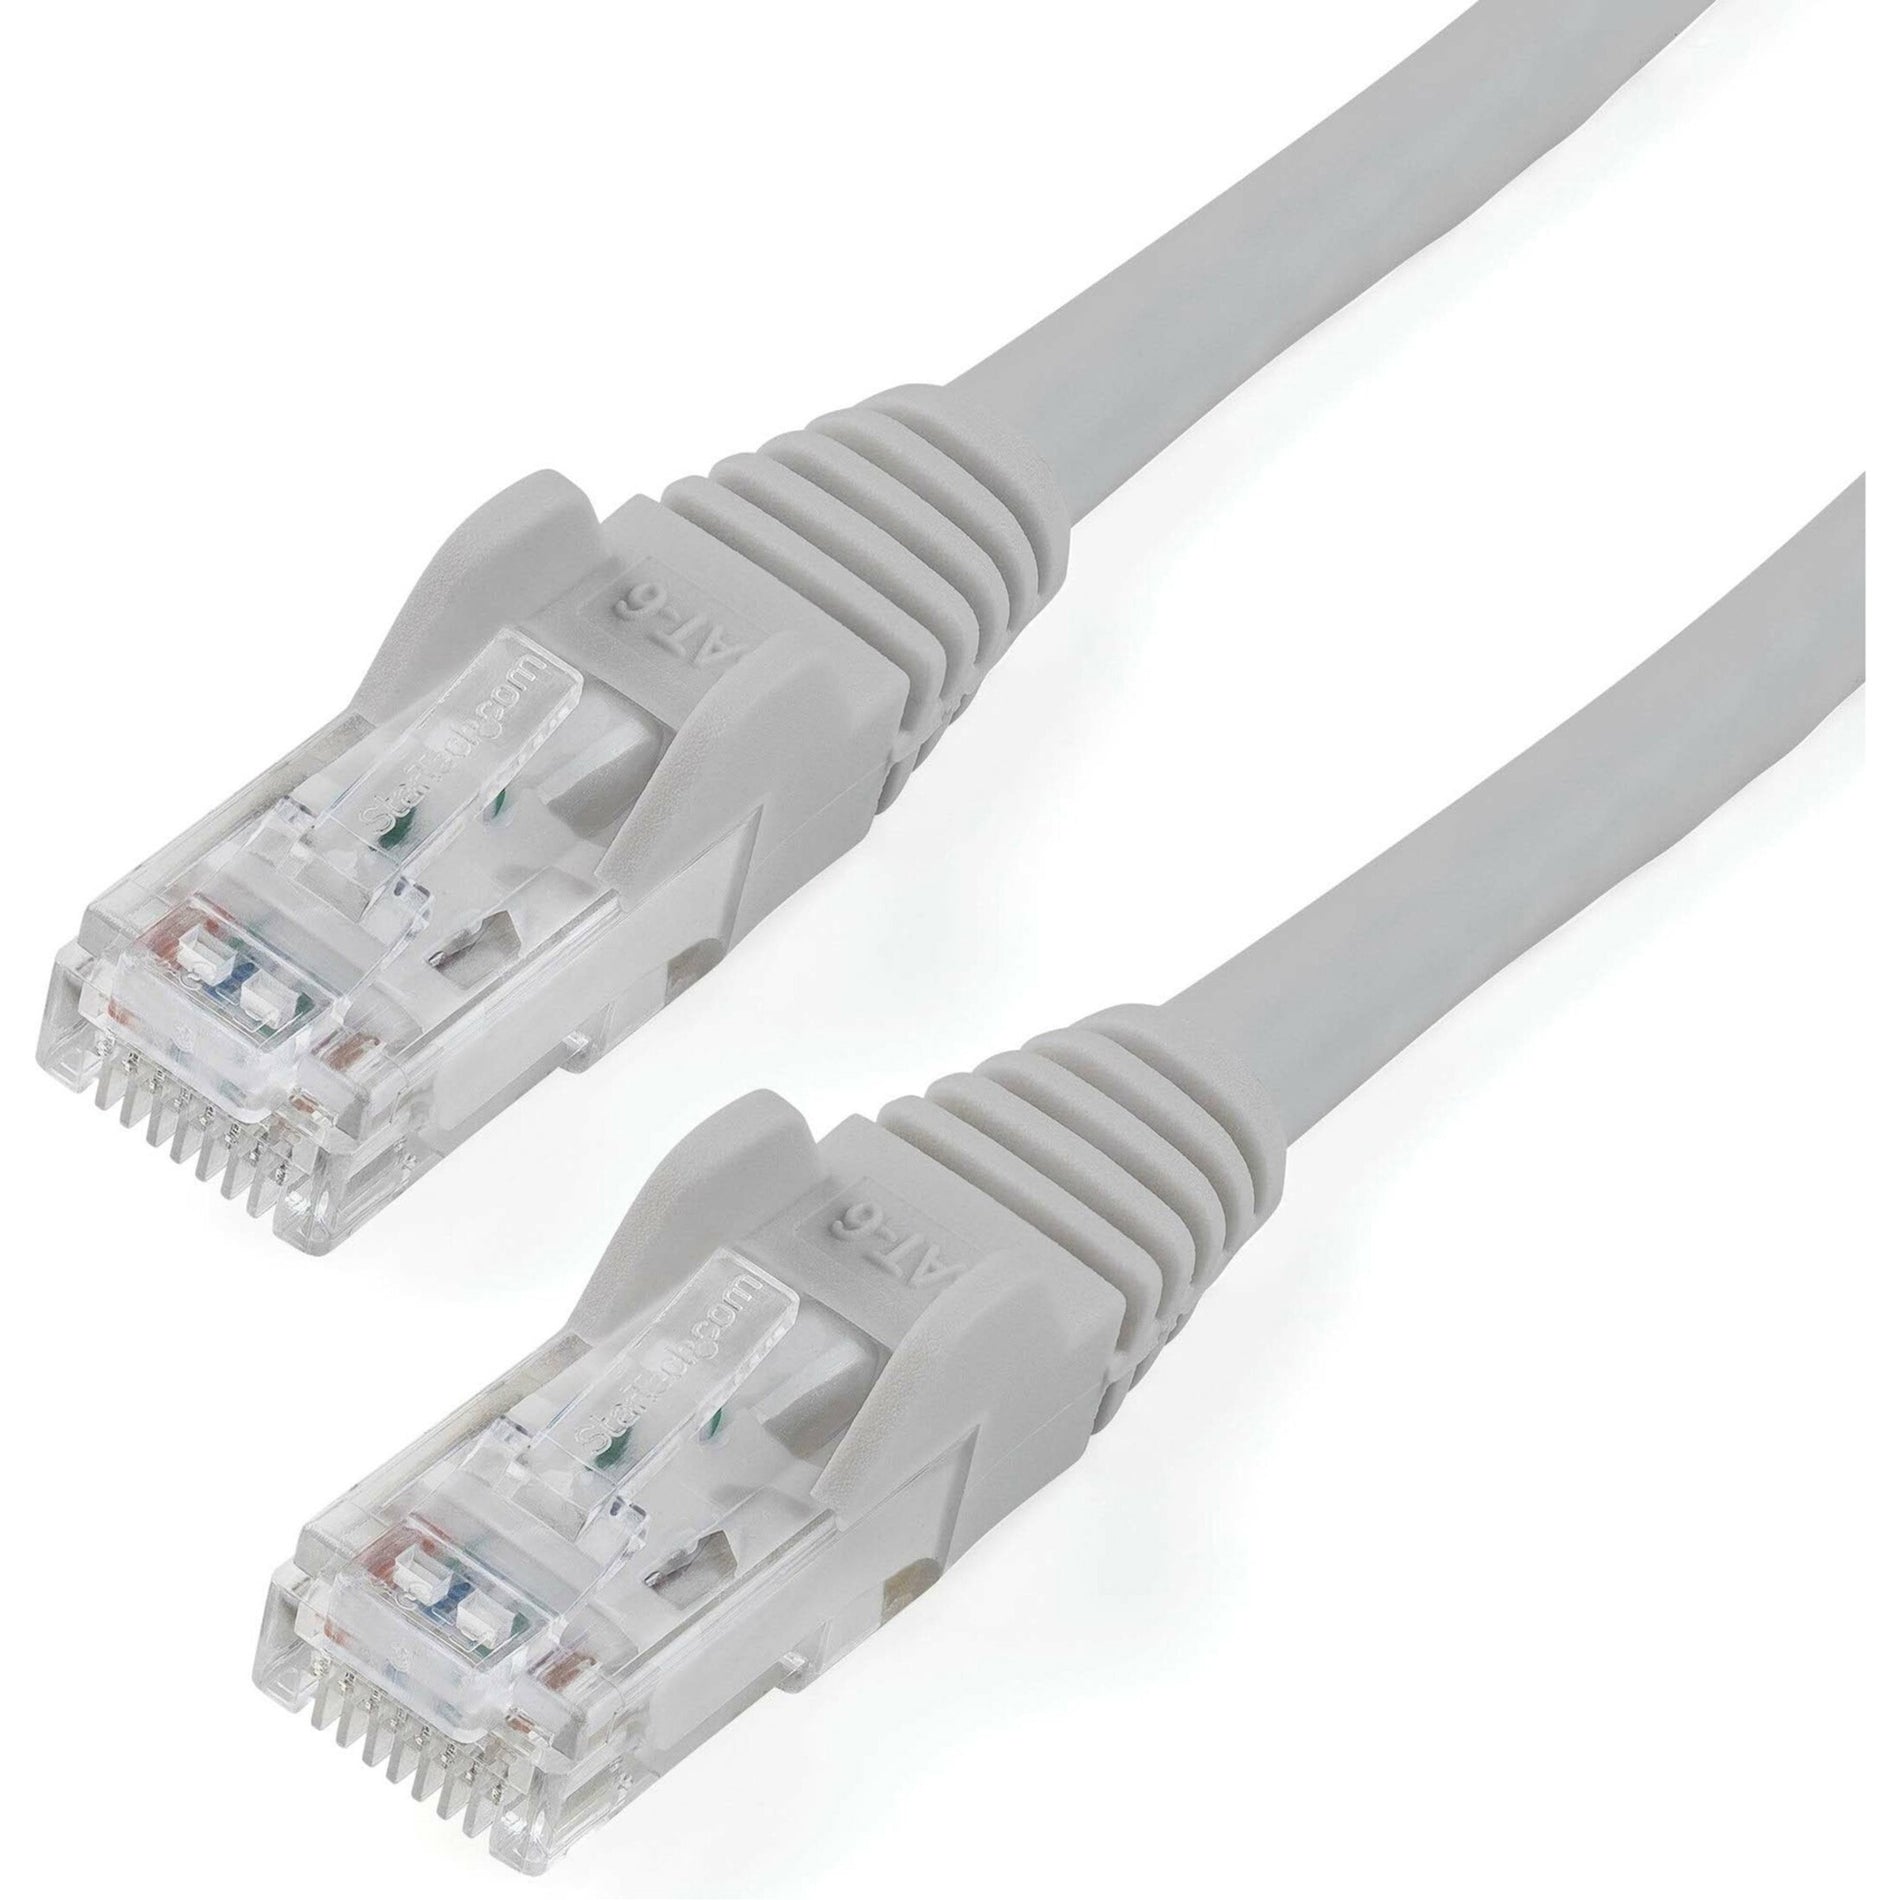 StarTech.com N6PATCH150GR Cat6 Patch Cable, 150ft Gray Ethernet Cable, Snagless RJ45 Connectors